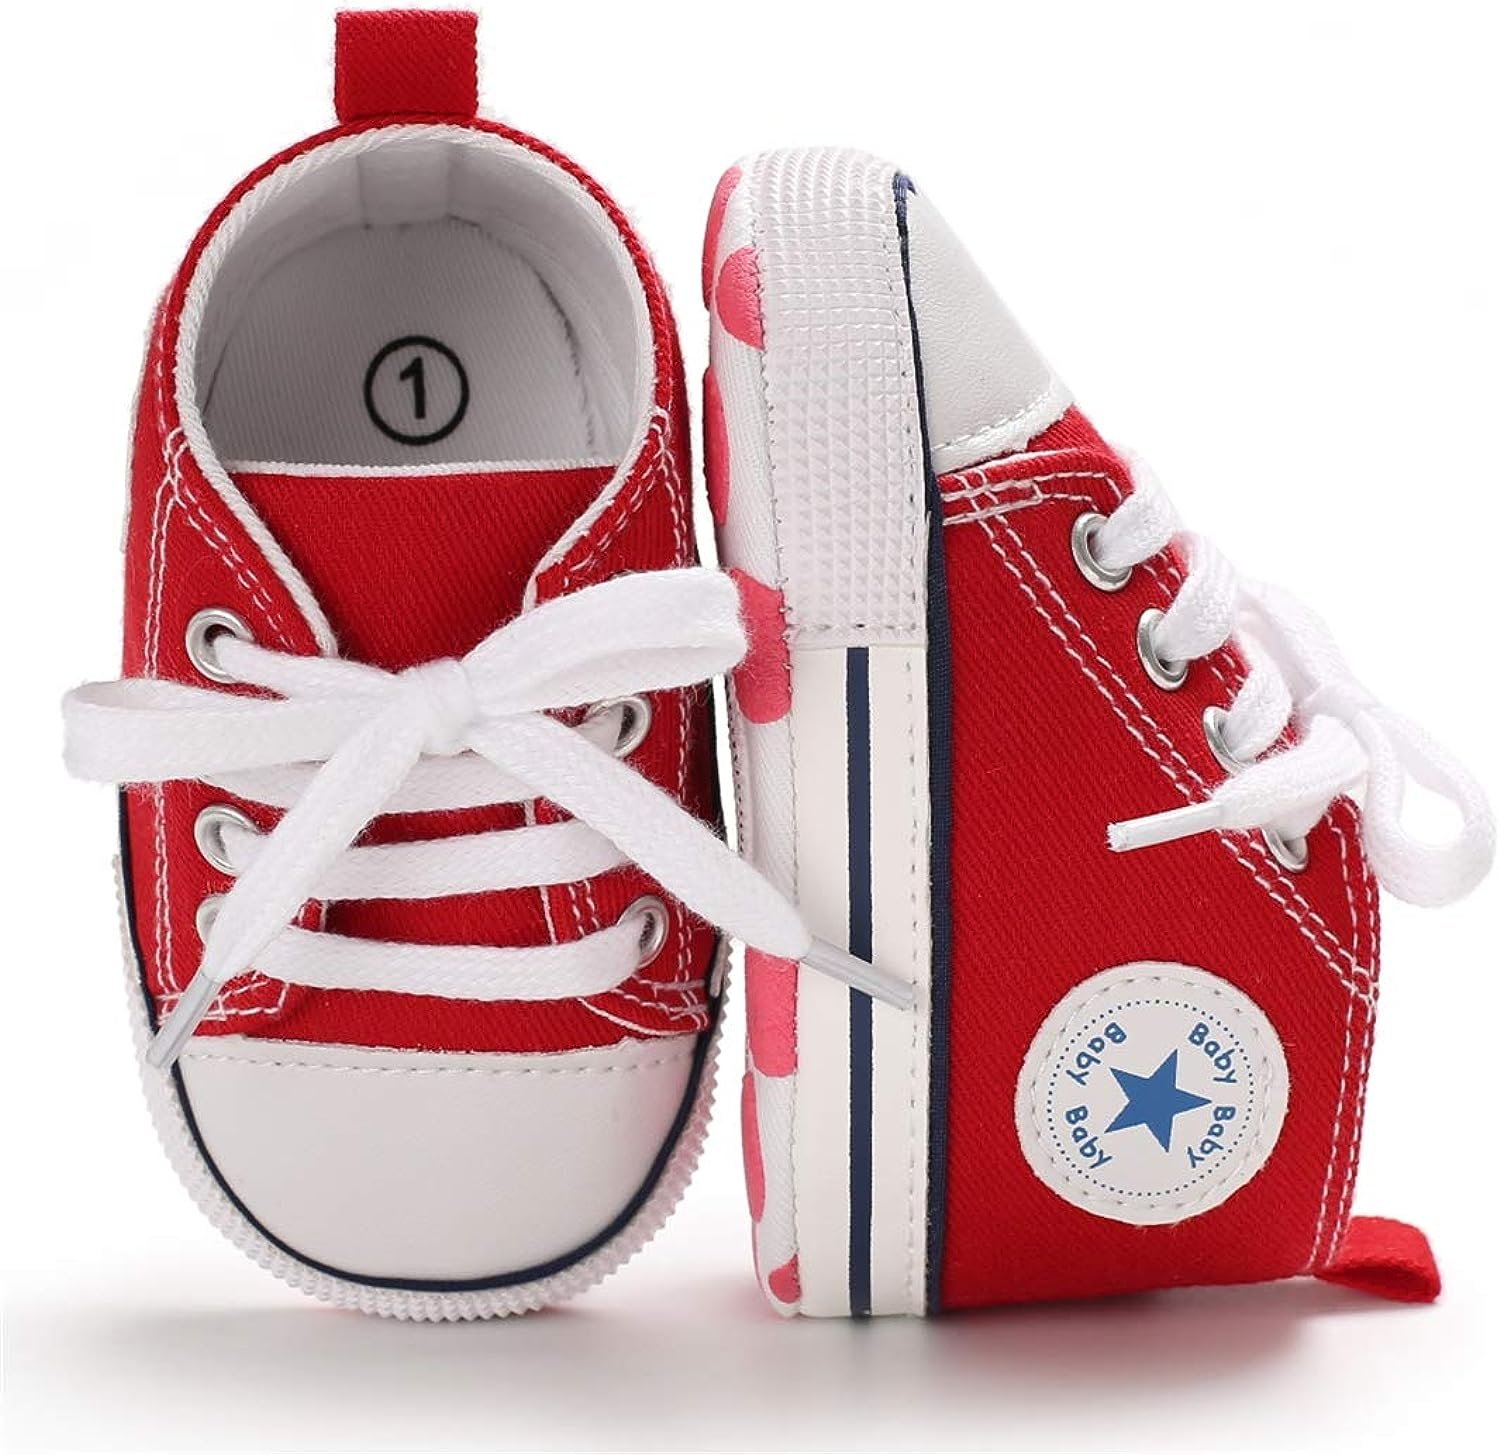 KIDSUN Tutoo Unisex Baby Boys Girls High Top Sneaker Soft Anti-Slip Sole Newborn Infant First Walkers Canvas Denim Shoes